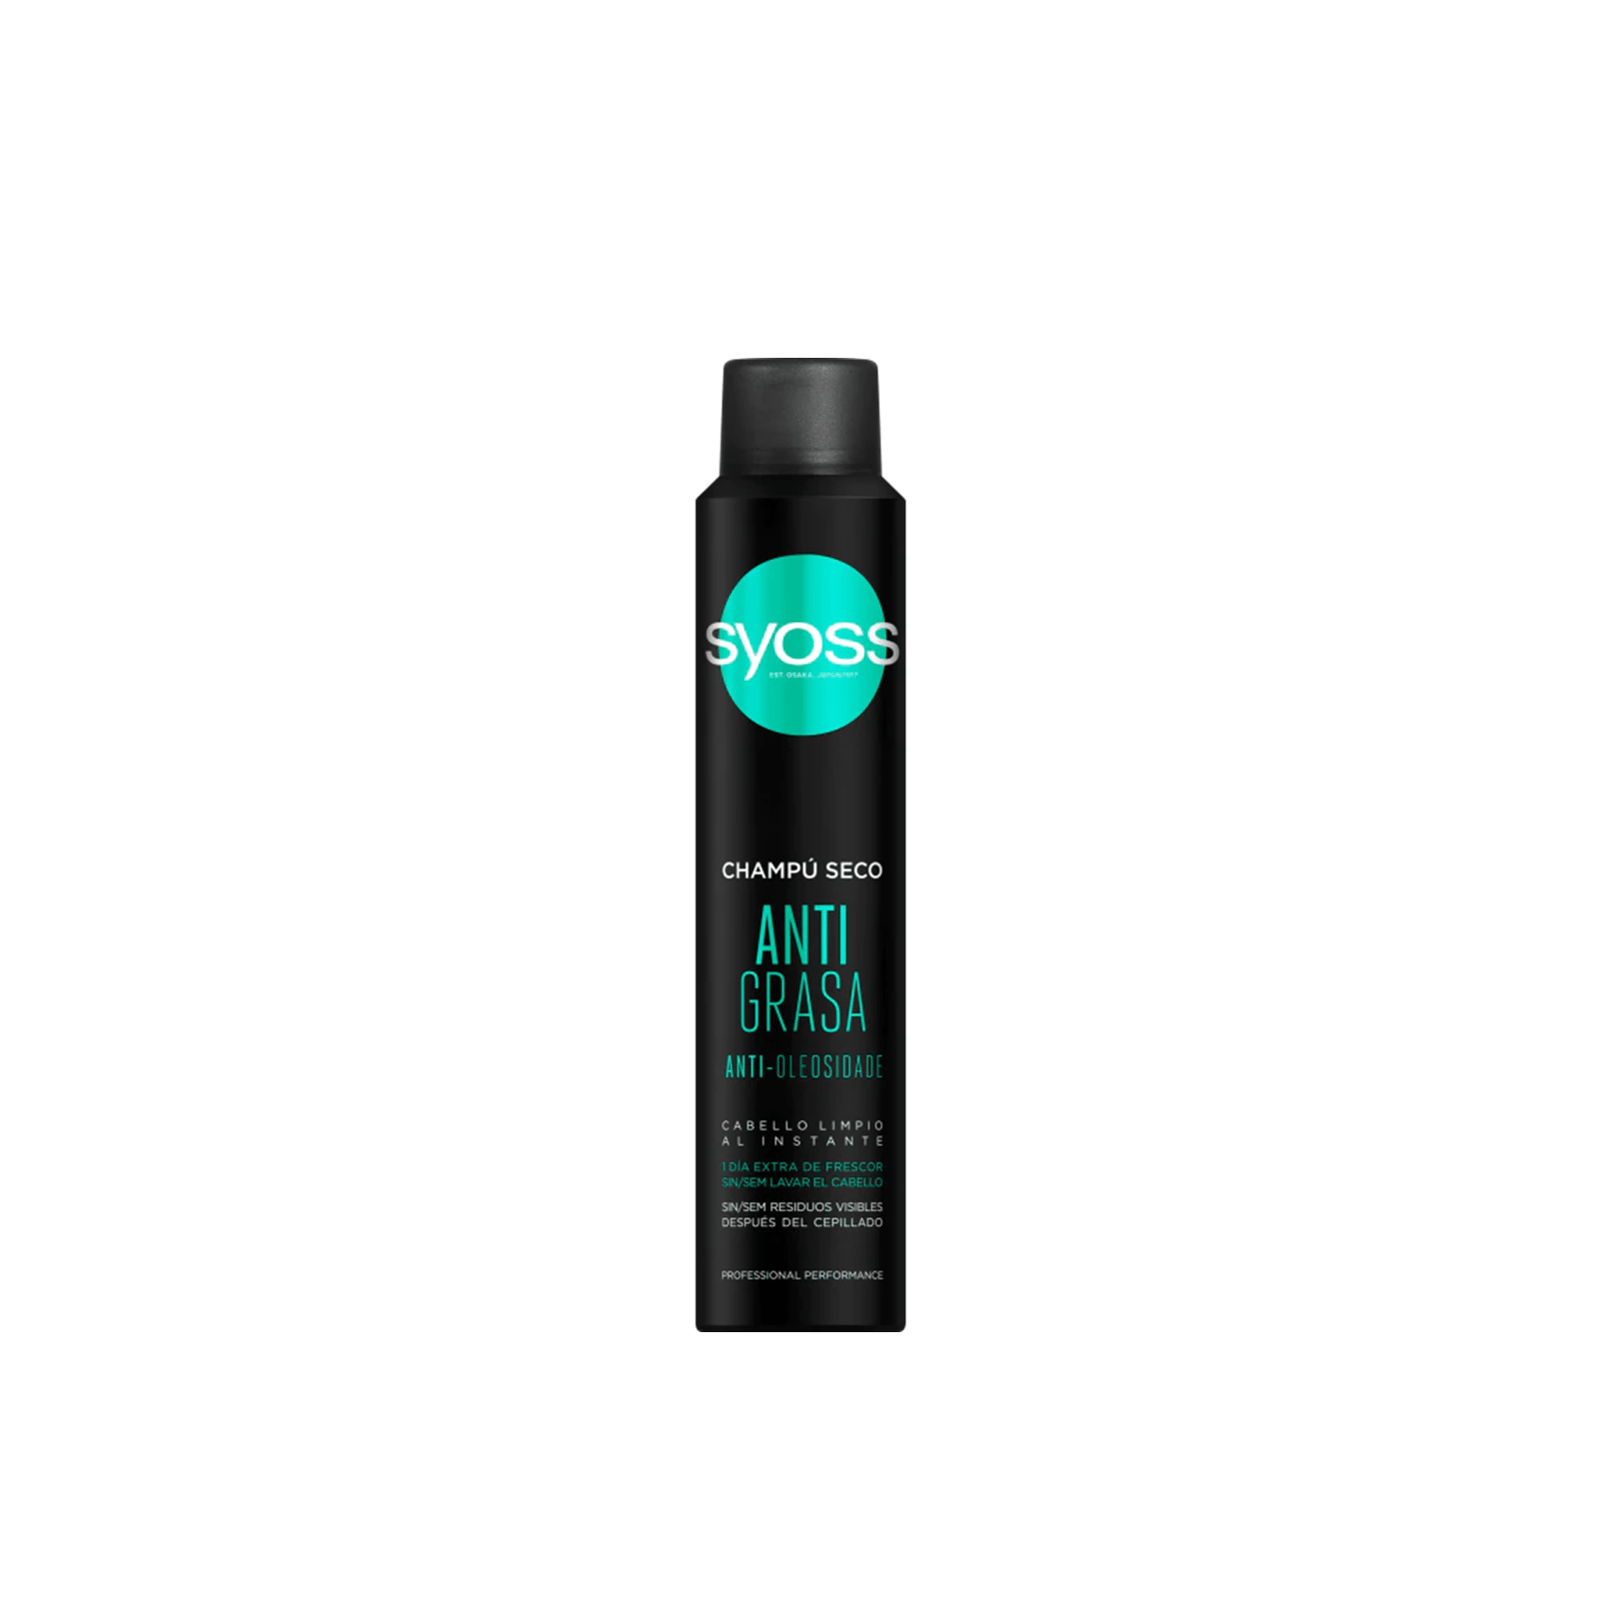 Syoss Anti Grease Dry Shampoo 200ml (6.76 fl oz)